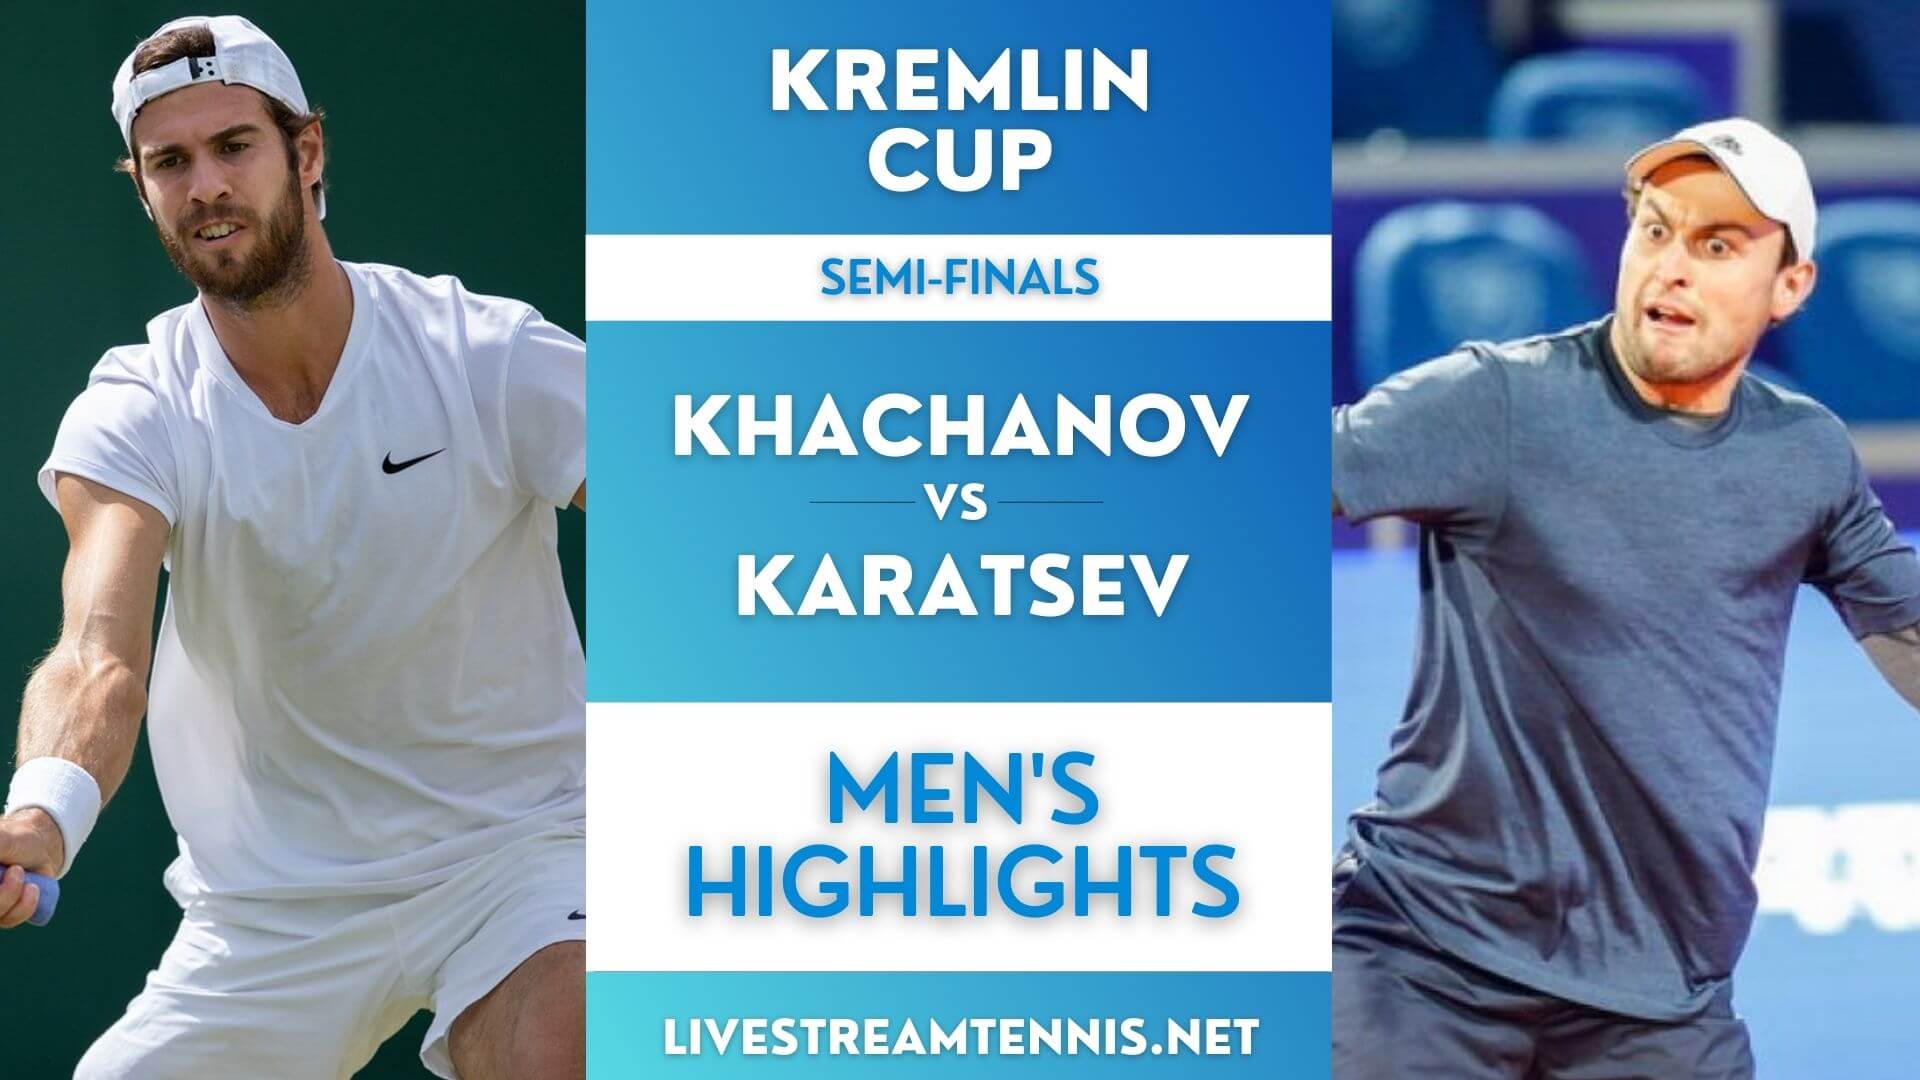 Kremlin Cup Men Semi Final 1 Highlights 2021